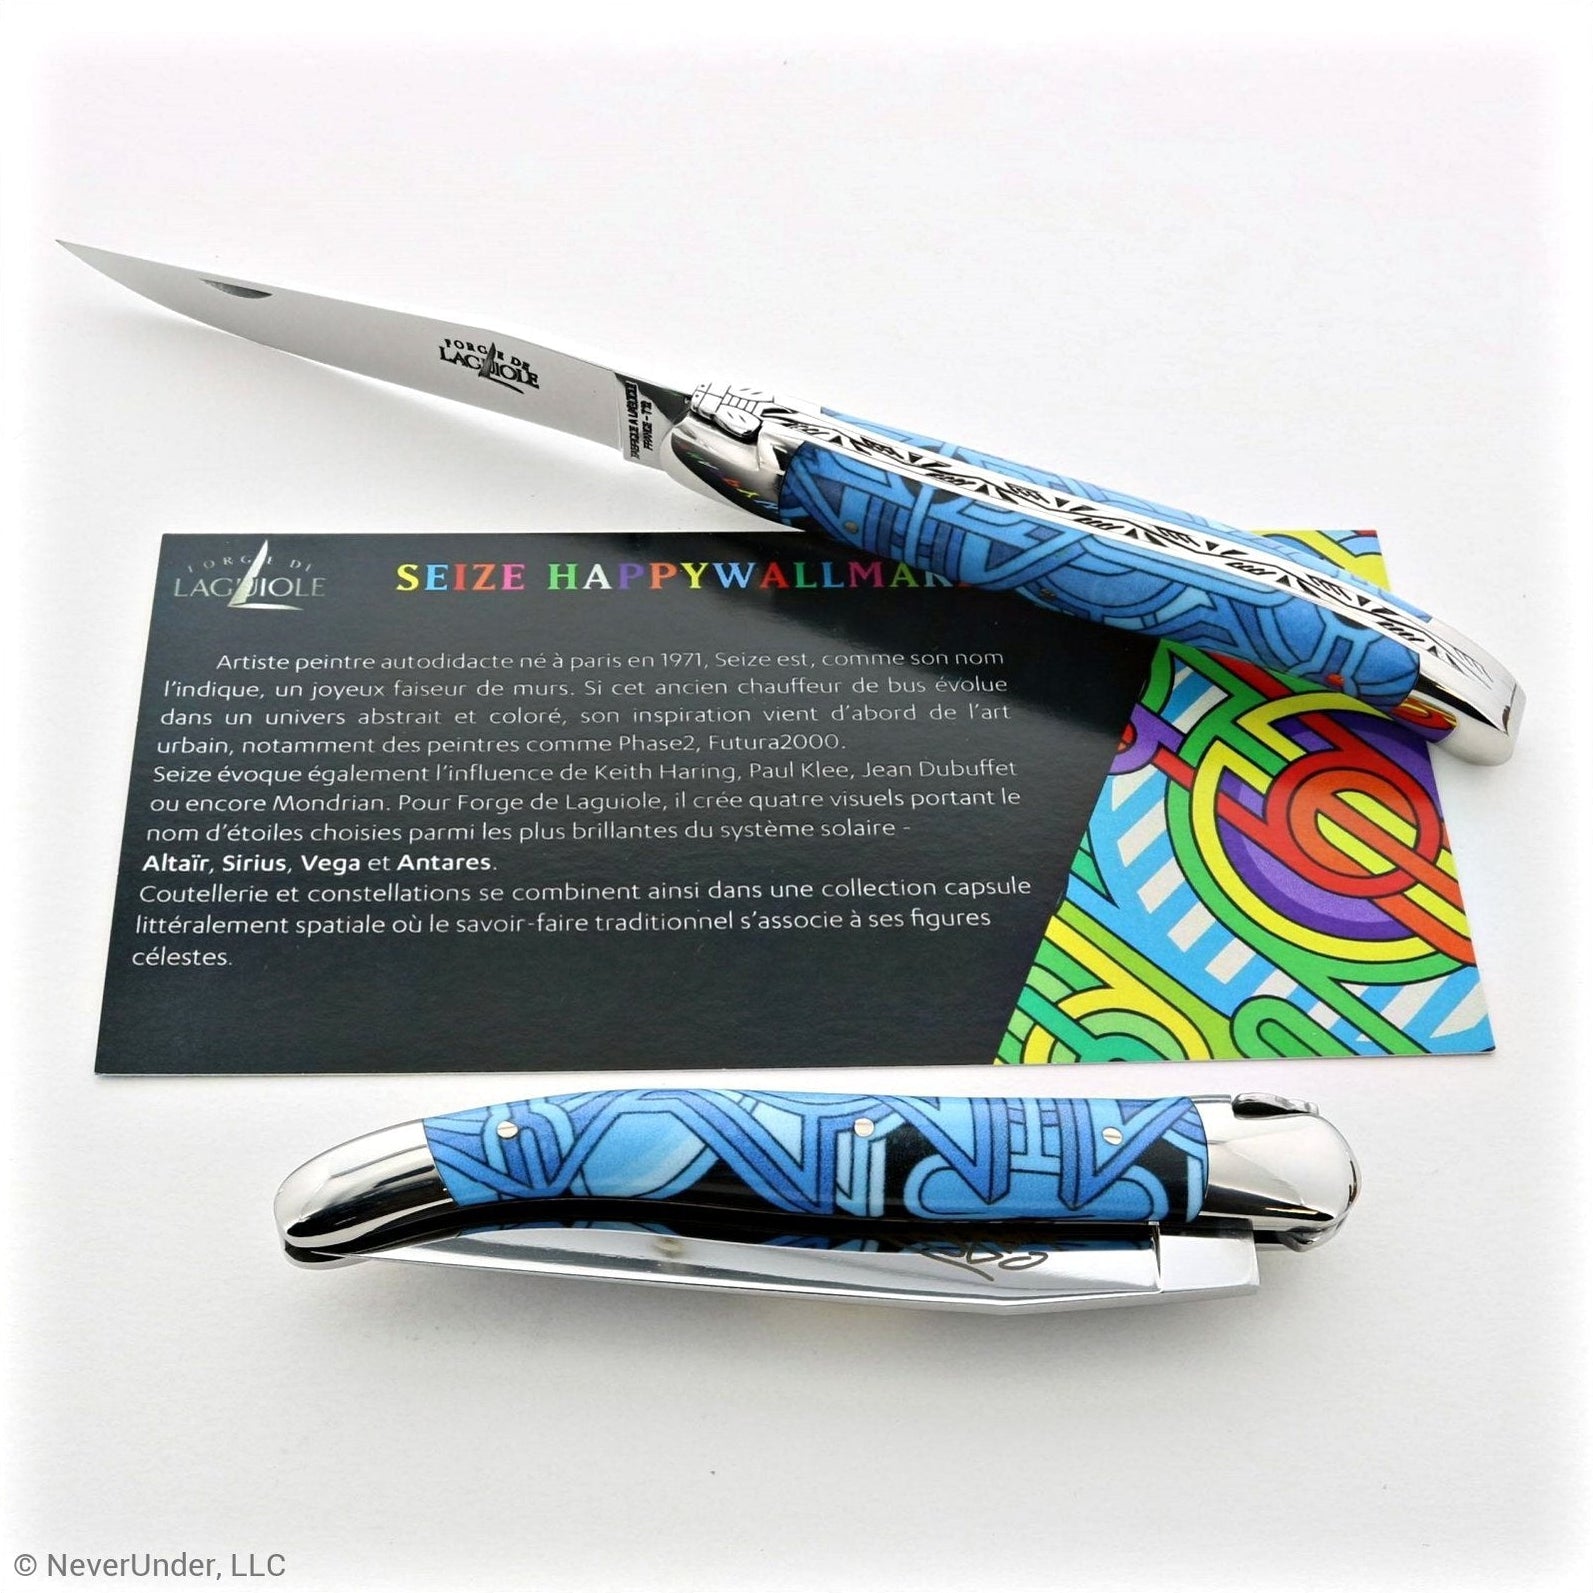 1pc Small Metal Art Knife Handmade Knife Wallpaper Knife Good-value  Household Disassembly Express Knife Paper Cutter